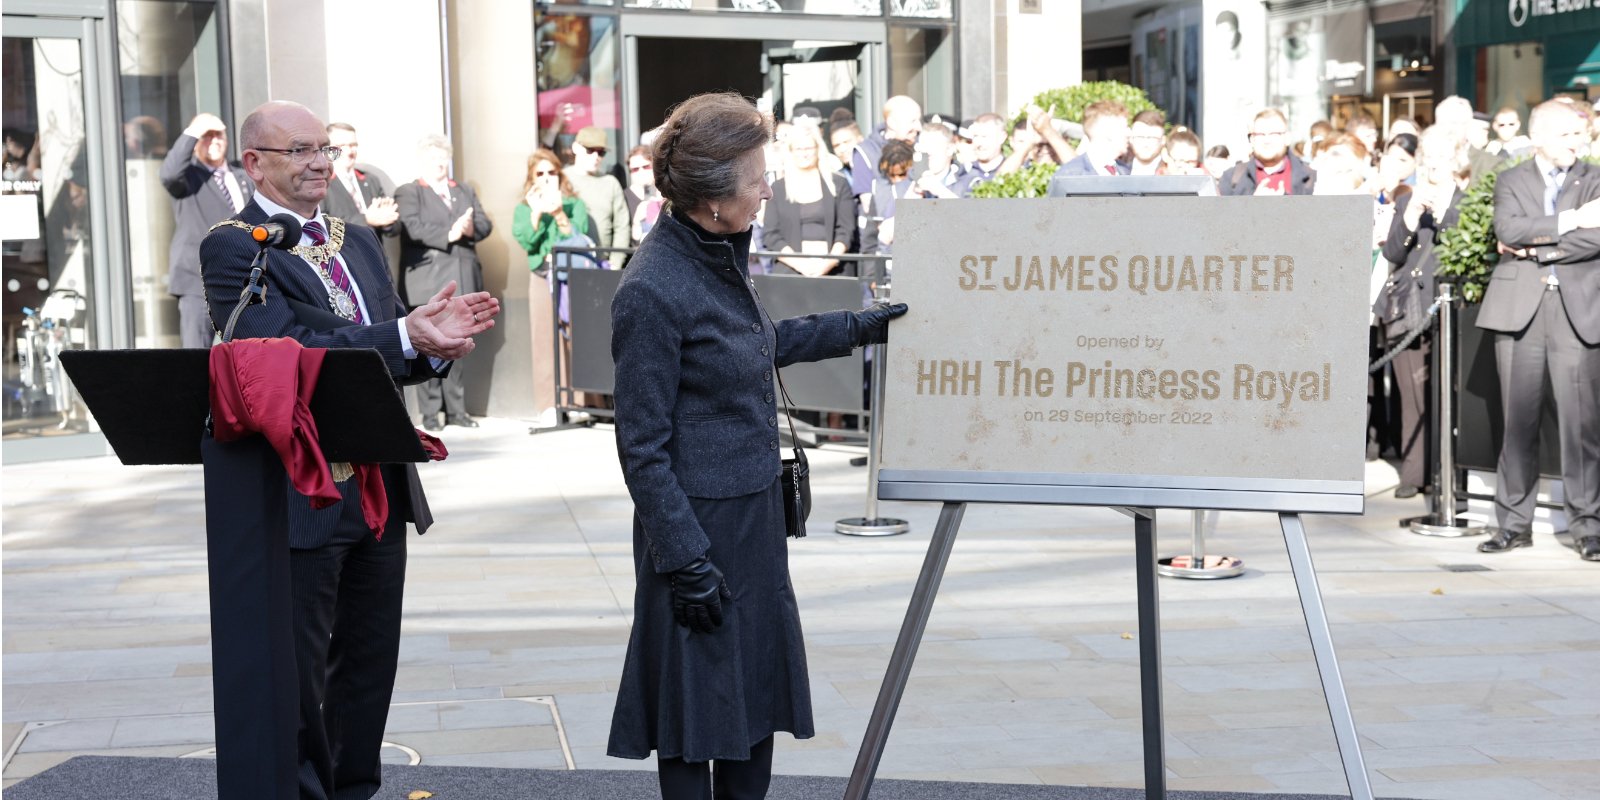 Princess Anne, Princess Royal unveils the foundation stone at St James Quarter, Edinburgh during a VIP tour of St James Quarter on September 29, 2022 in Edinburgh, Scotland.